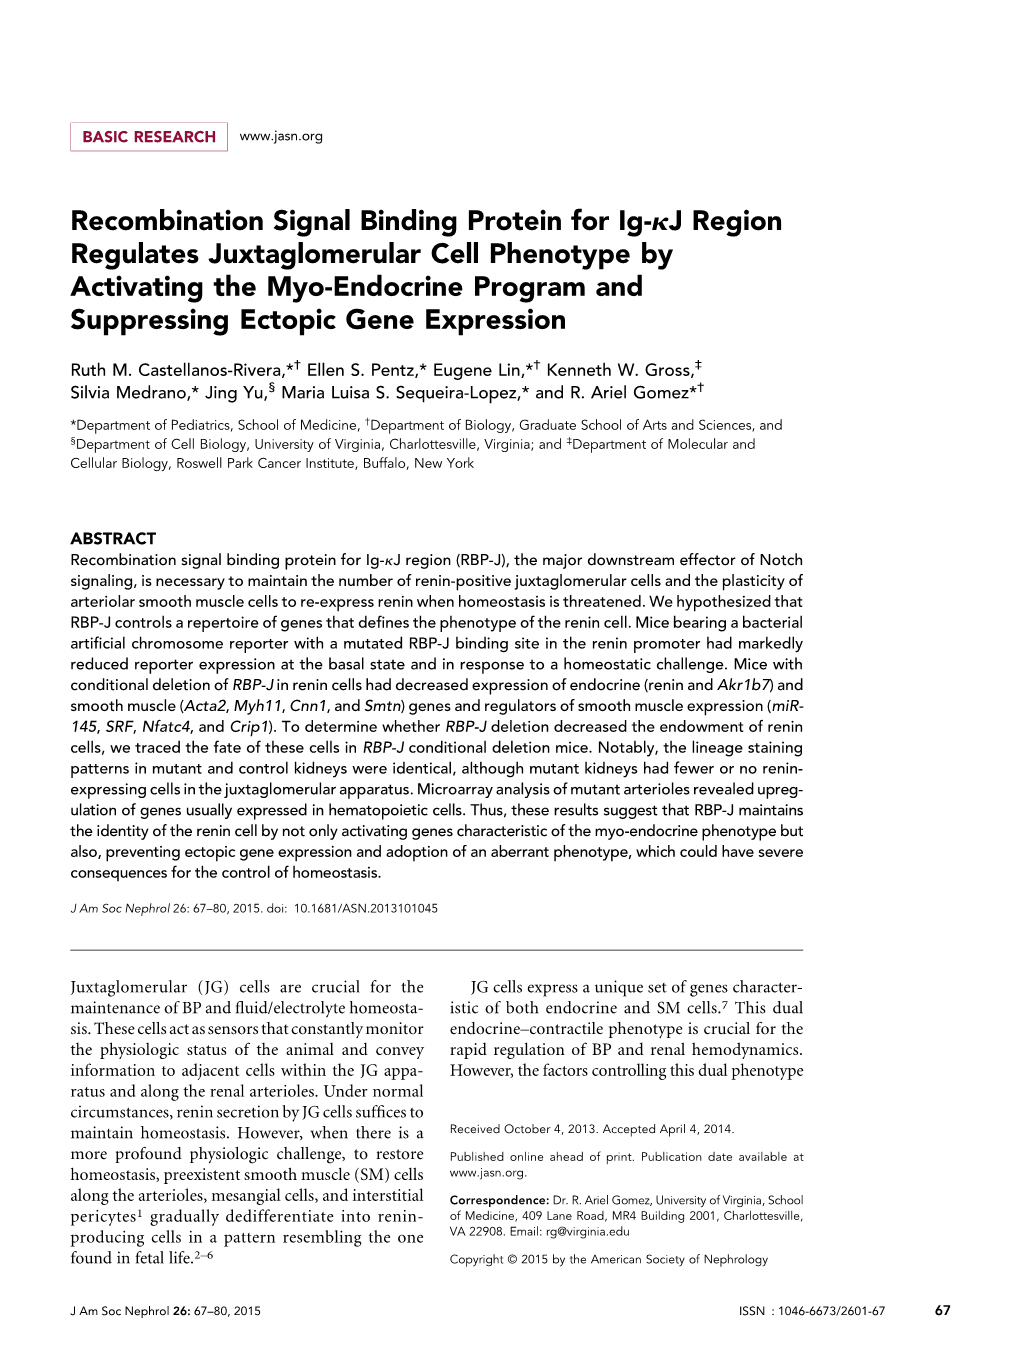 Recombination Signal Binding Protein for Ig-Kj Region Regulates Juxtaglomerular Cell Phenotype by Activating the Myo-Endocrine P